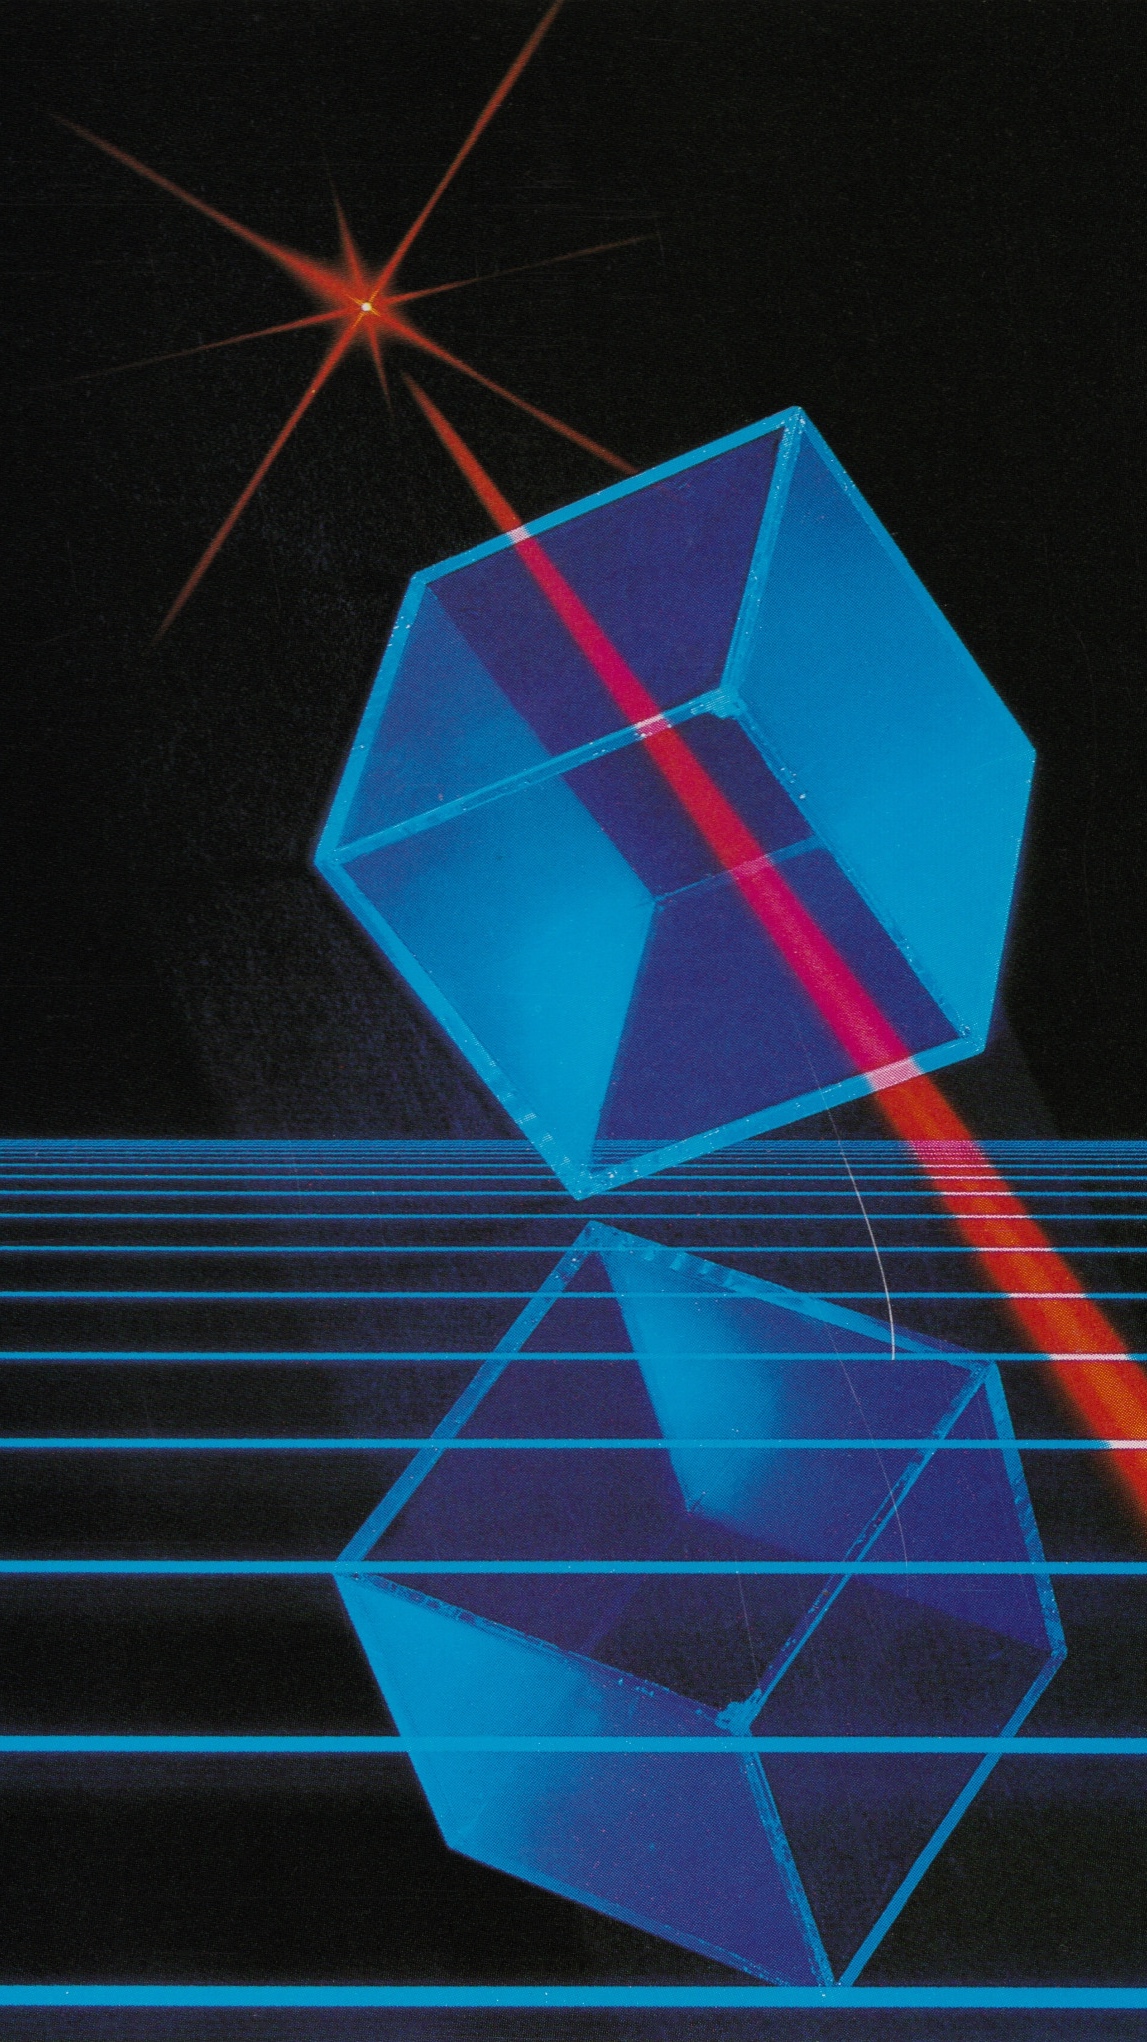 1980s Retro Style Cube Lazar 1147x2042